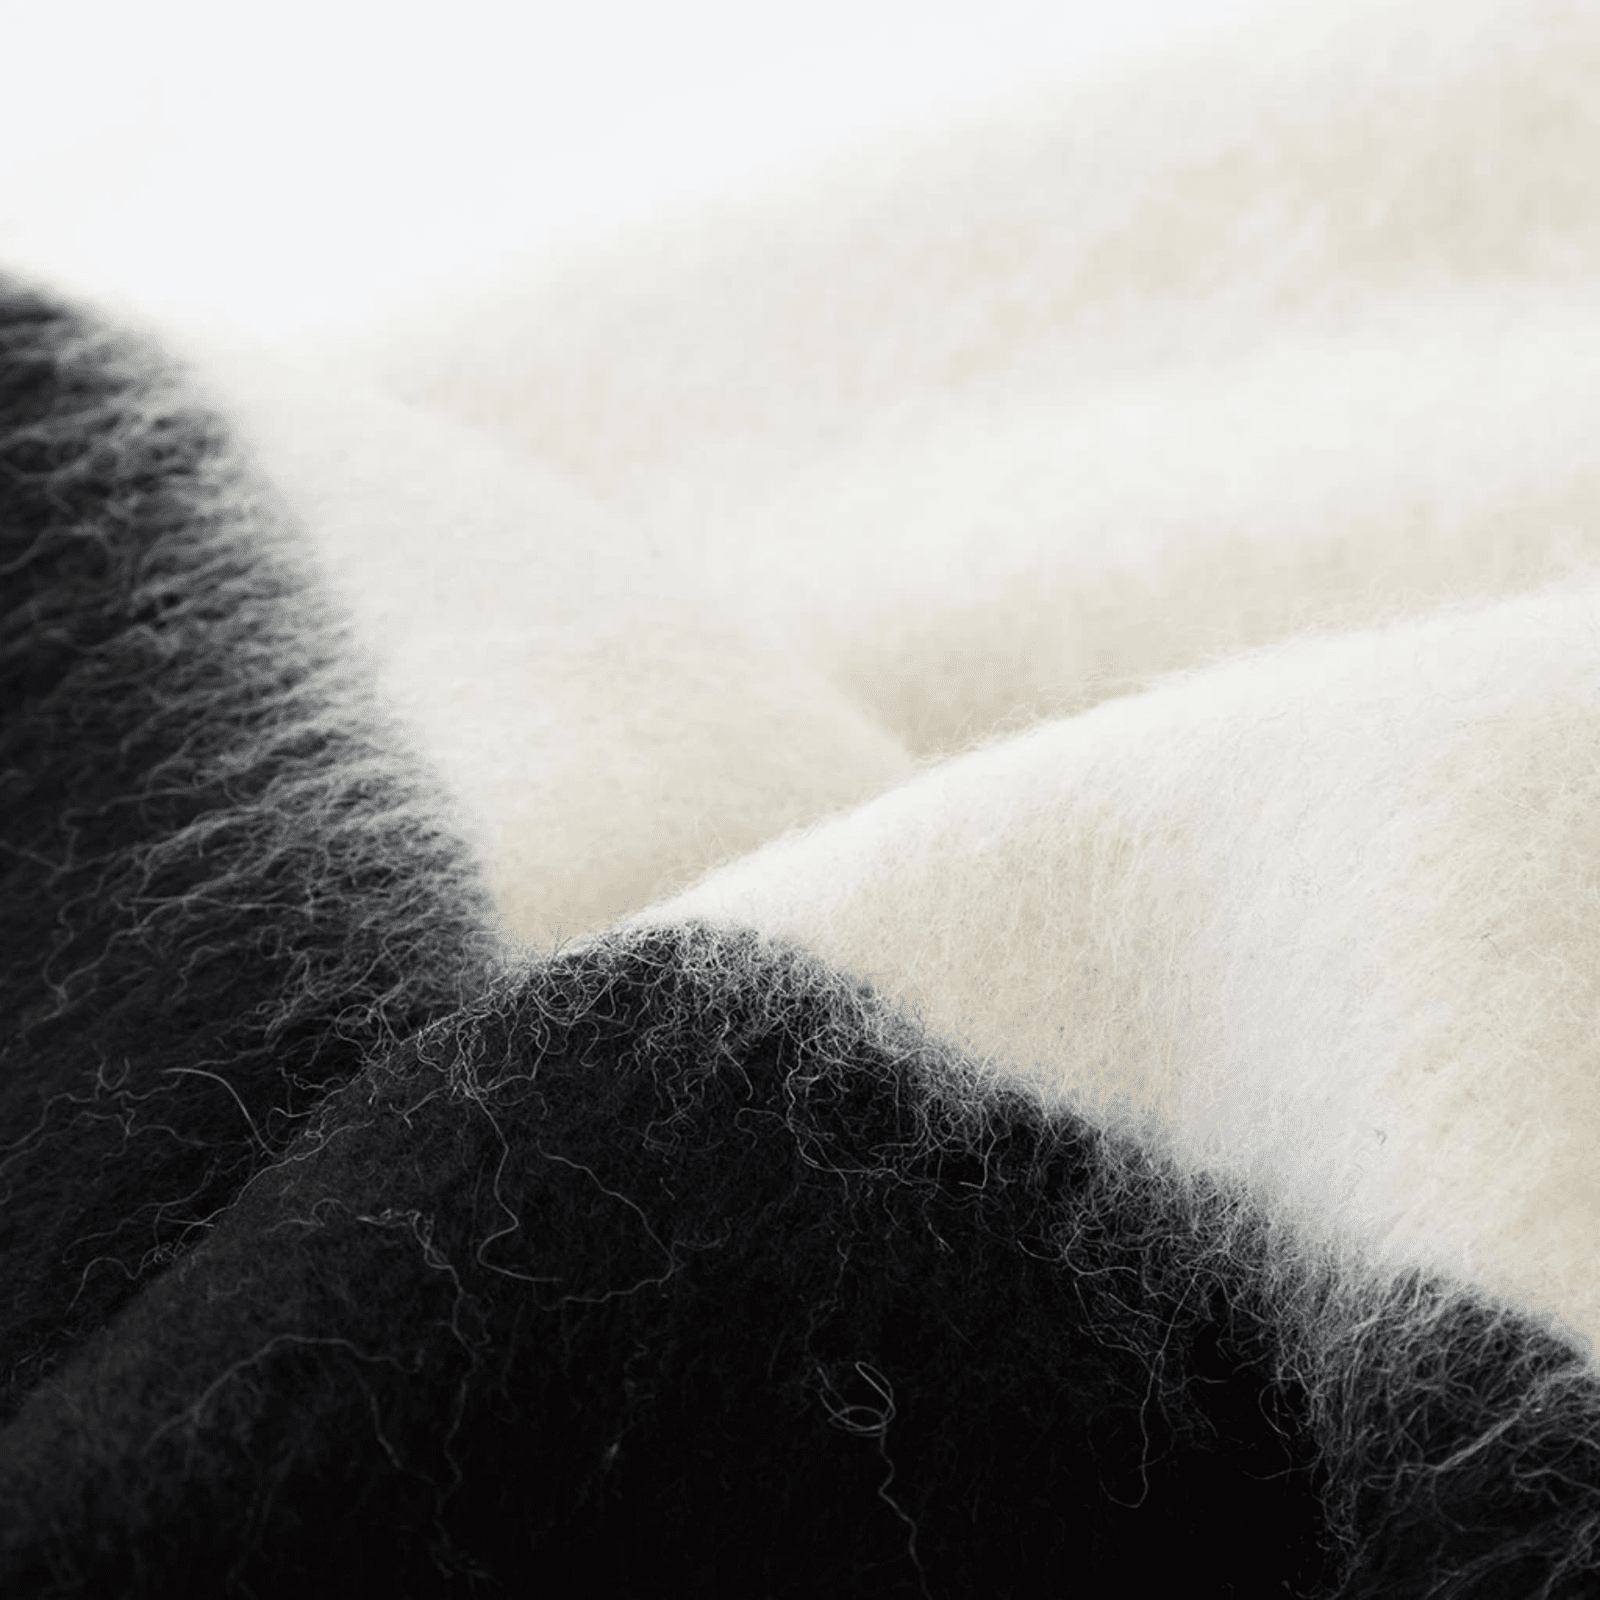 The Siempre Recycled Blanket - Ivory/Black Stripe